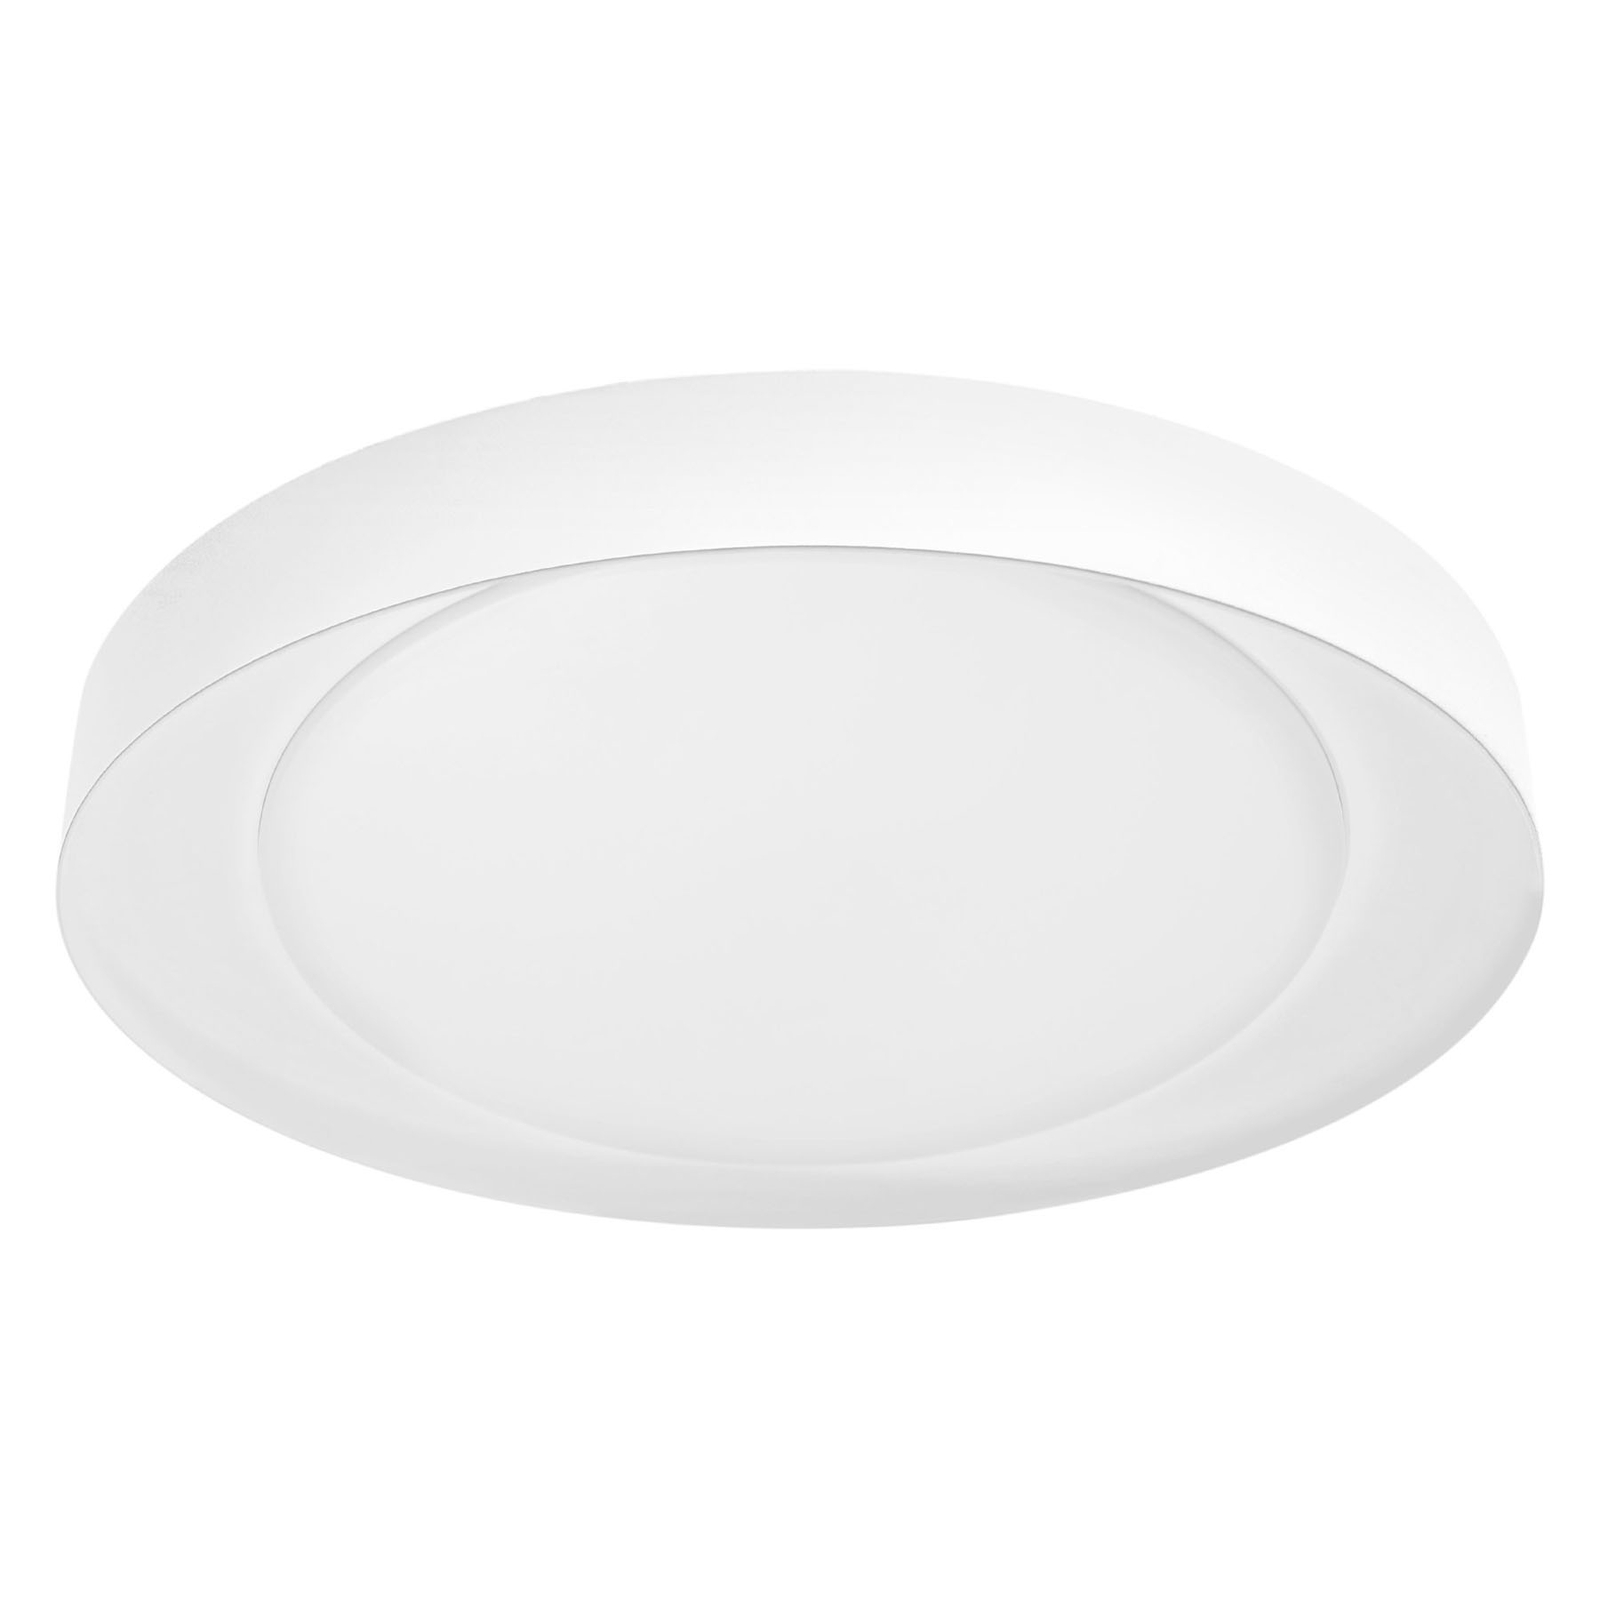 LEDVANCE SMART+ WiFi Orbis Eye CCT 49cm bílá